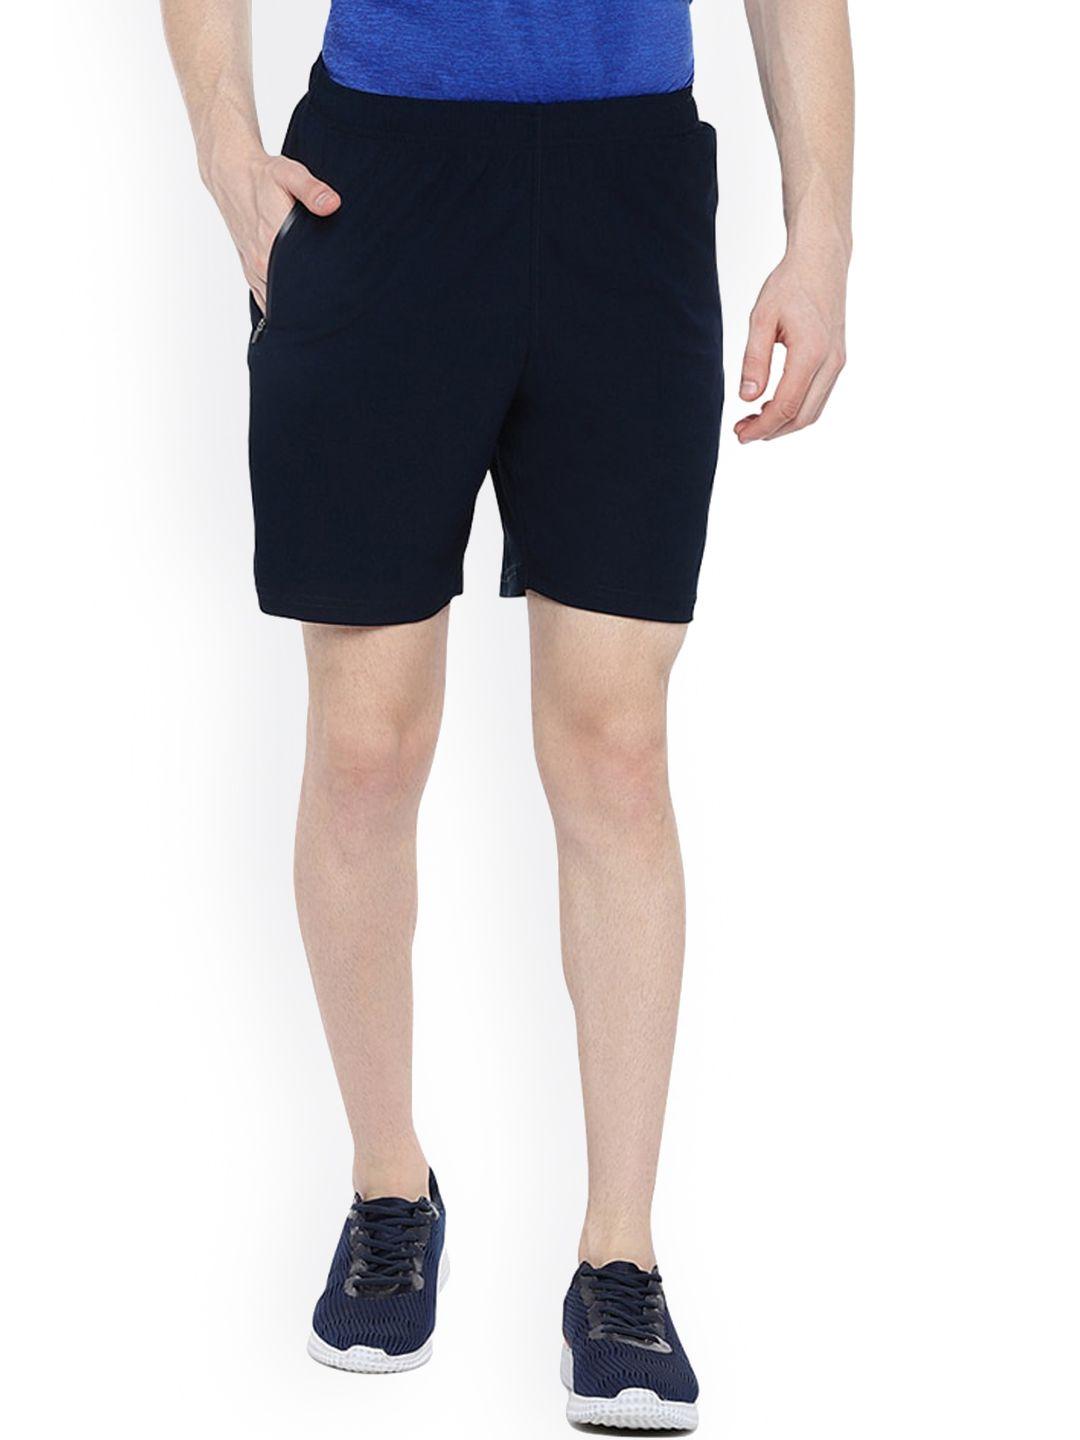 omtex men navy blue training or gym sports shorts